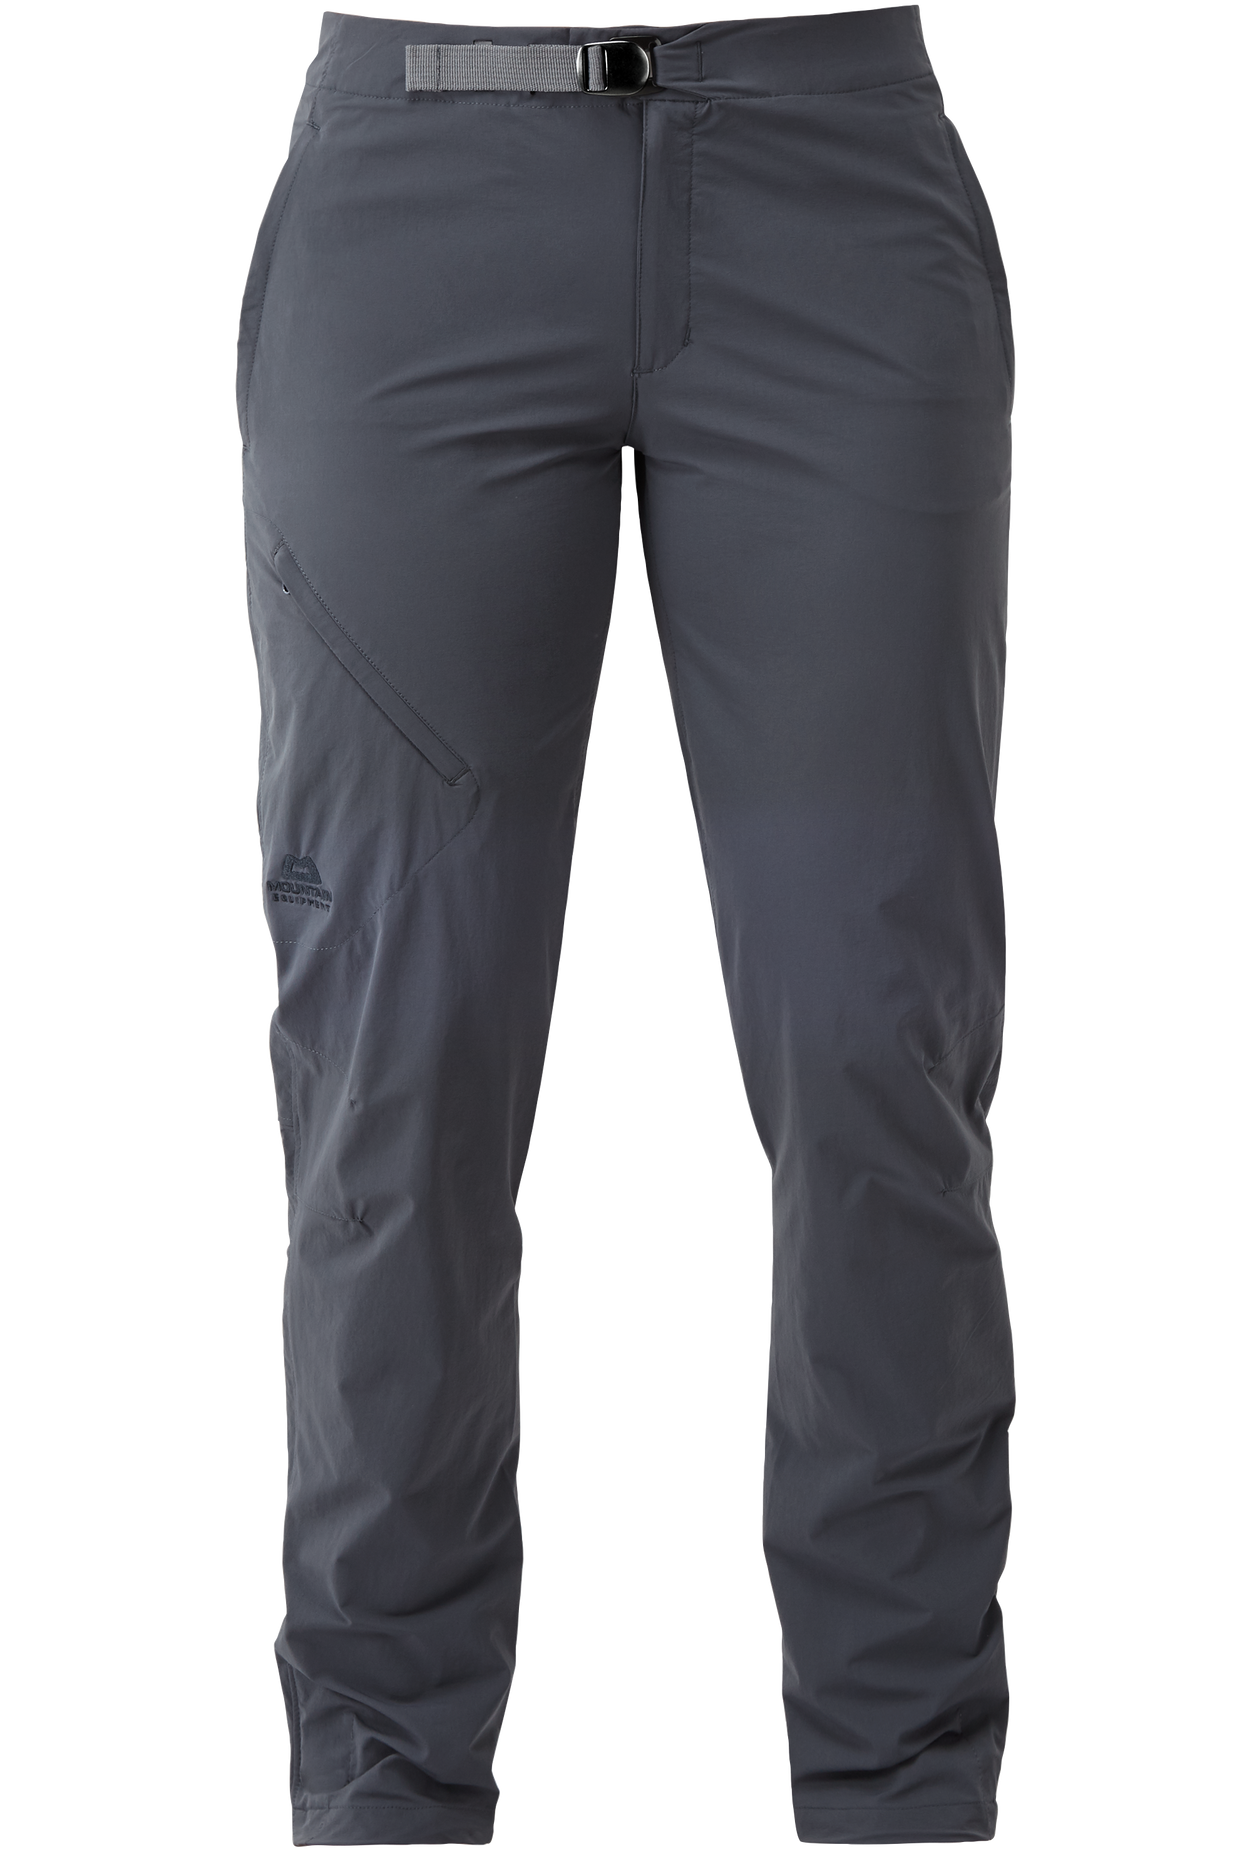 Mountain Equipment dámské softshellové kalhoty Comici Wmns Pant Barva: Ombre Blue, Velikost: 8/XS